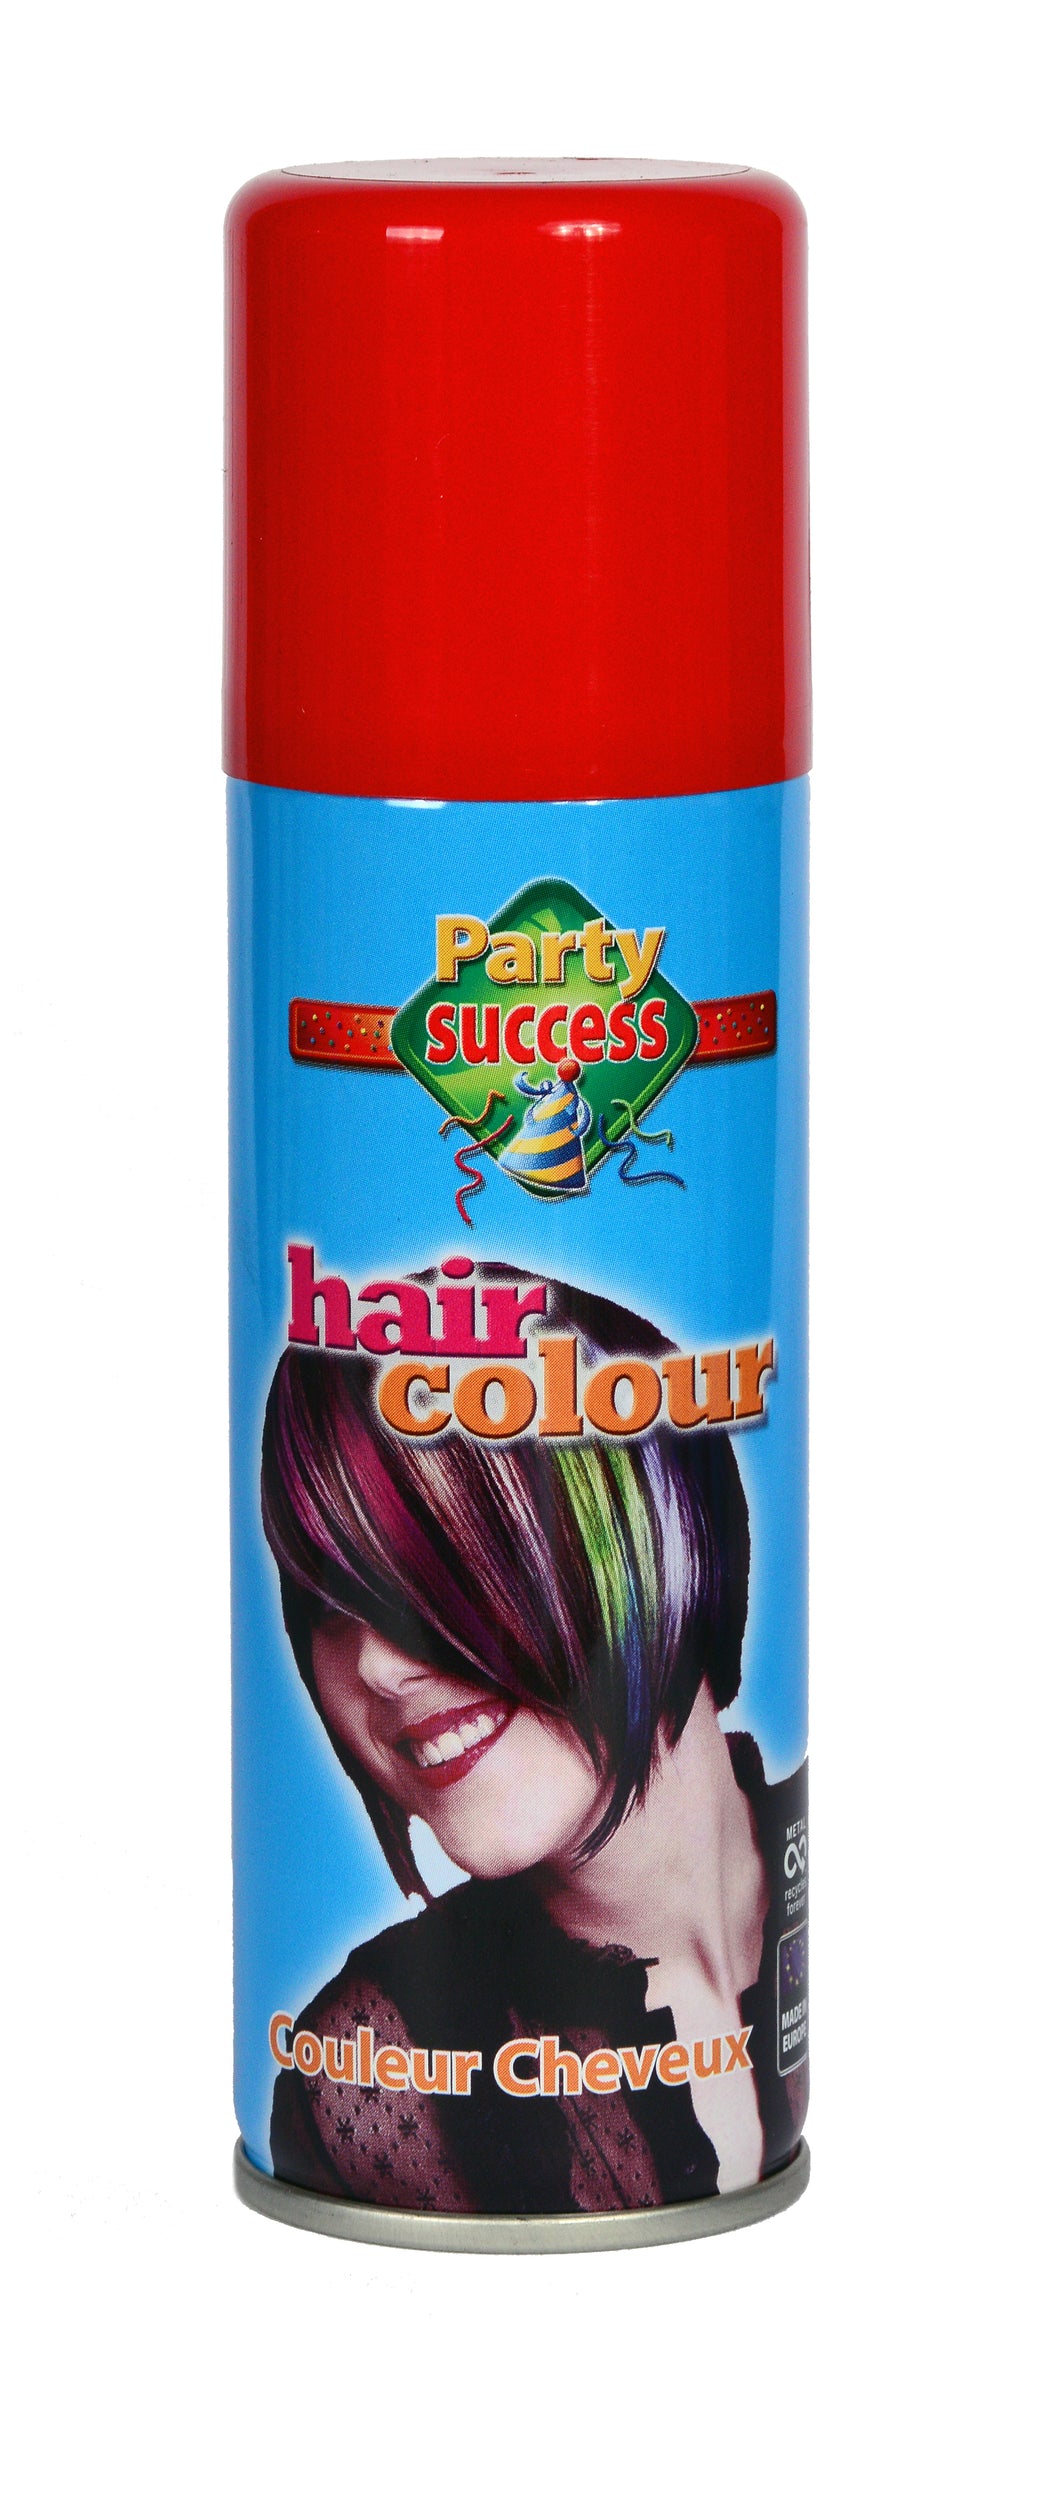 Party Success Hair Colour Spray 125ml - red